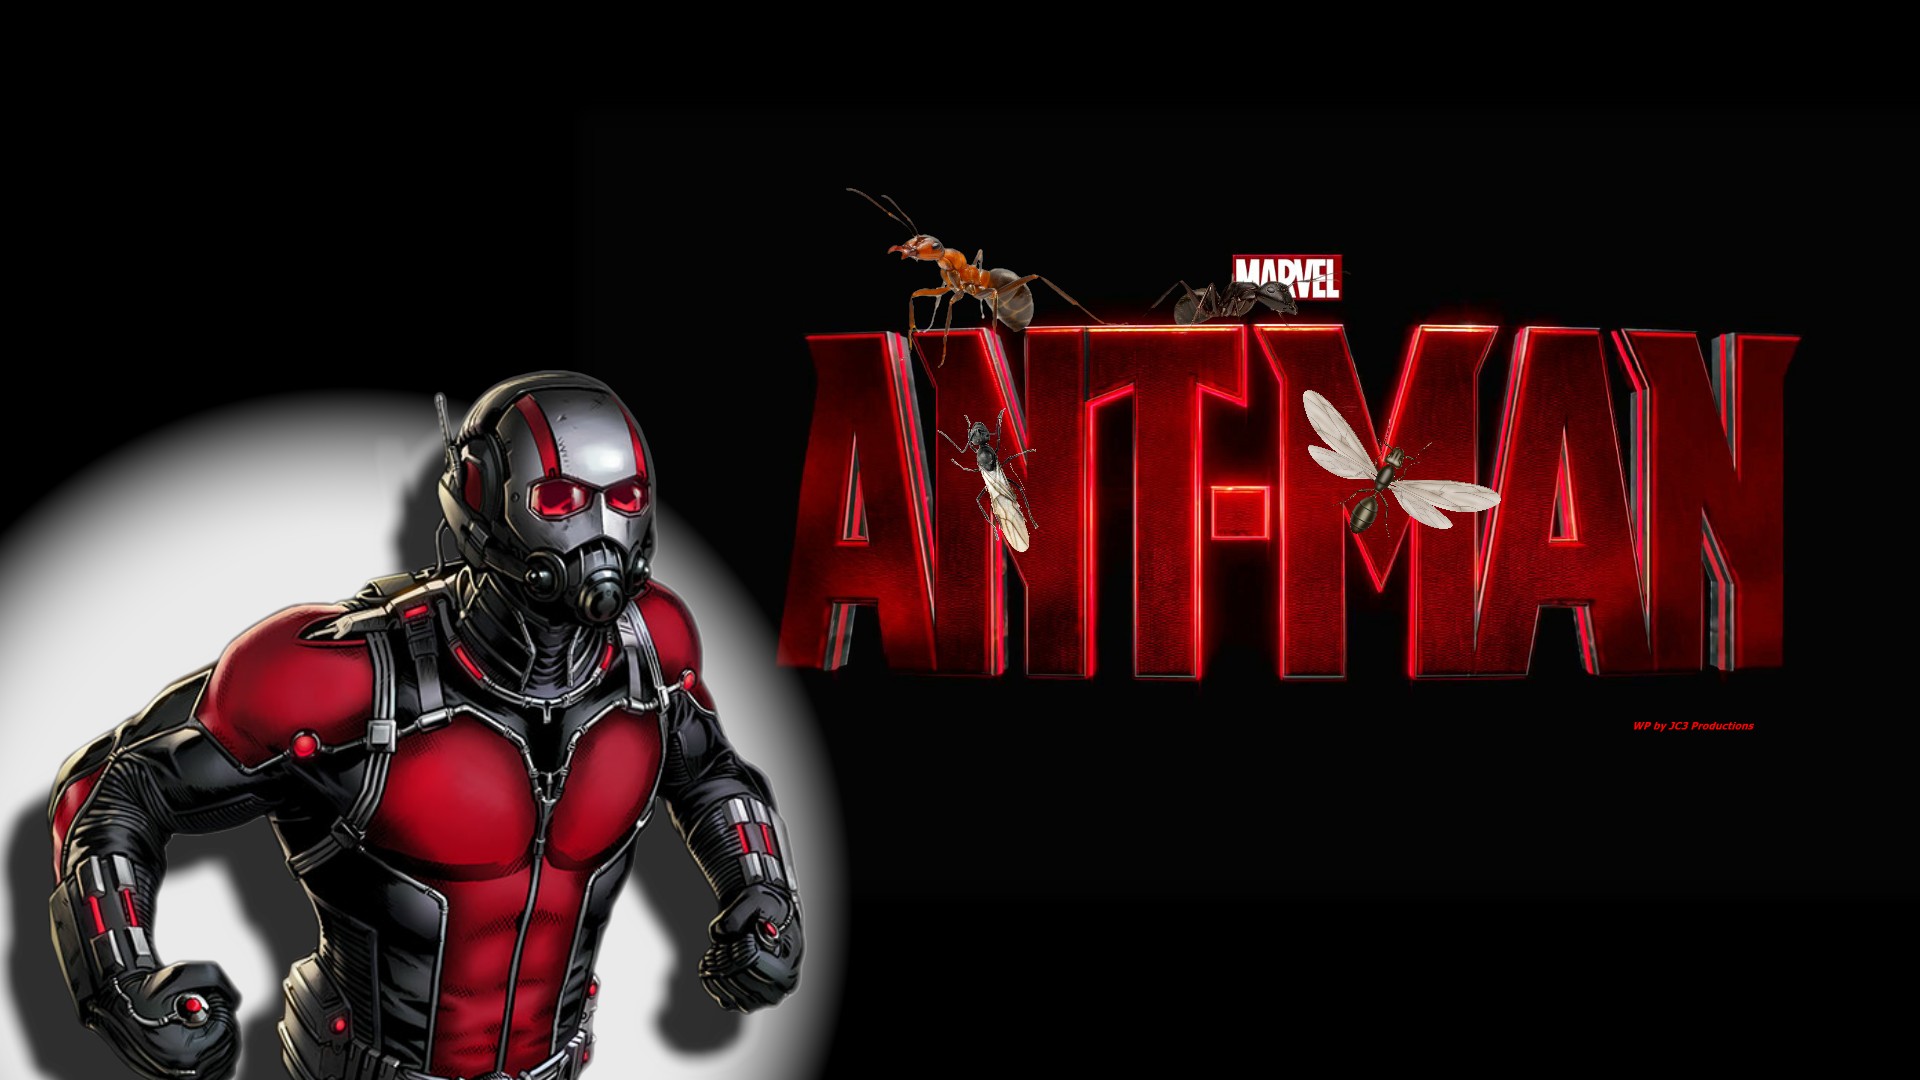 Ant Man 4b - Ant-Man Wallpaper (41014995) - Fanpop